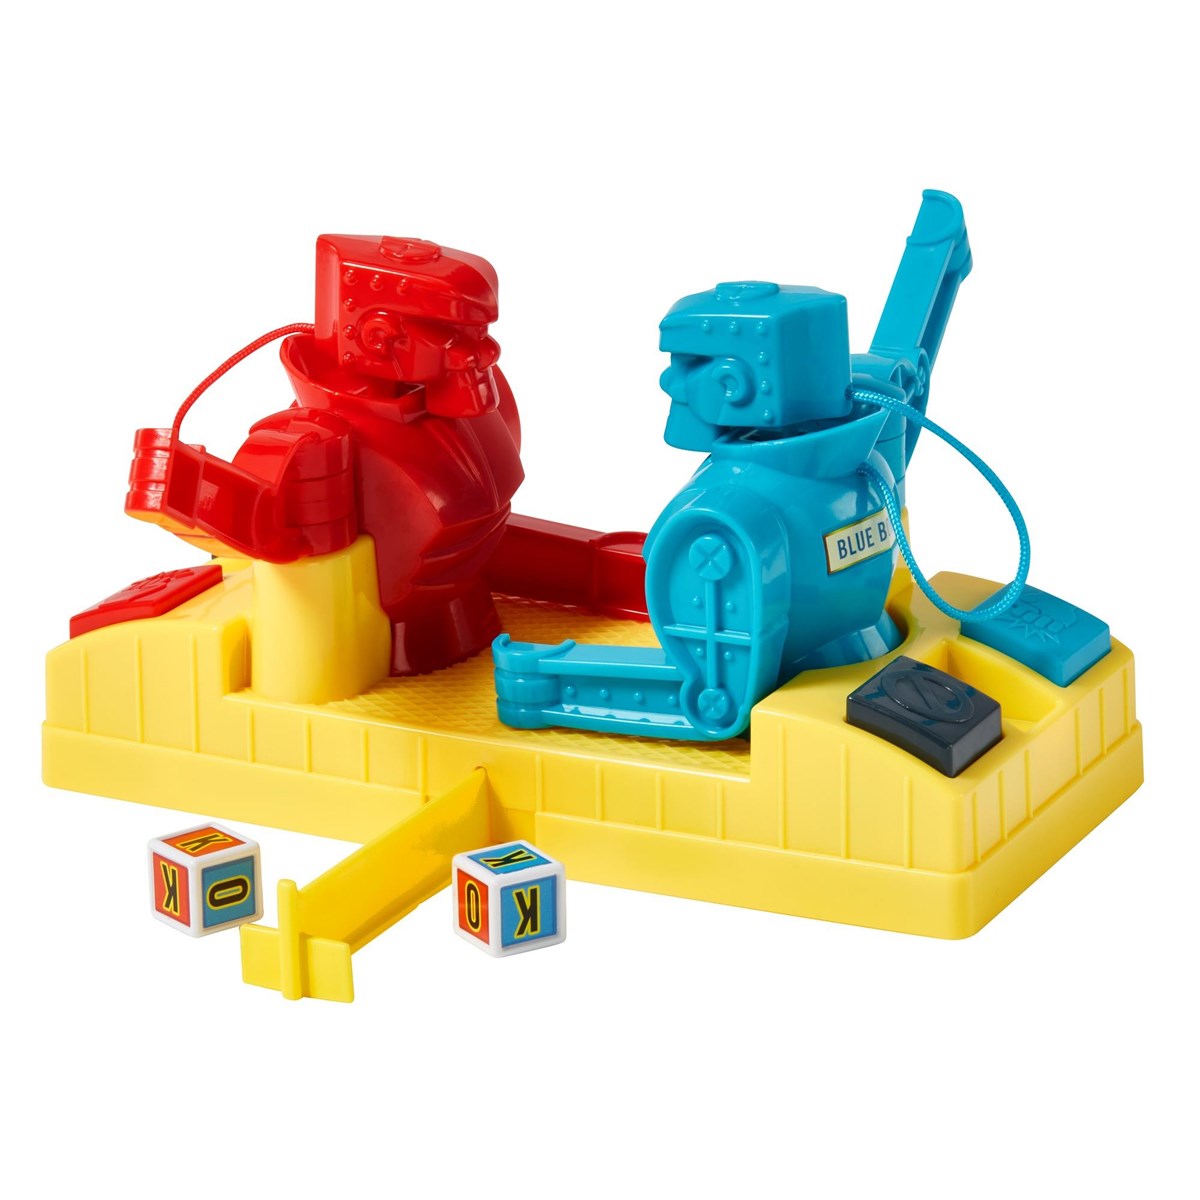 Rock 'Em Sock 'Em Robotlar HDN94 | Toysall